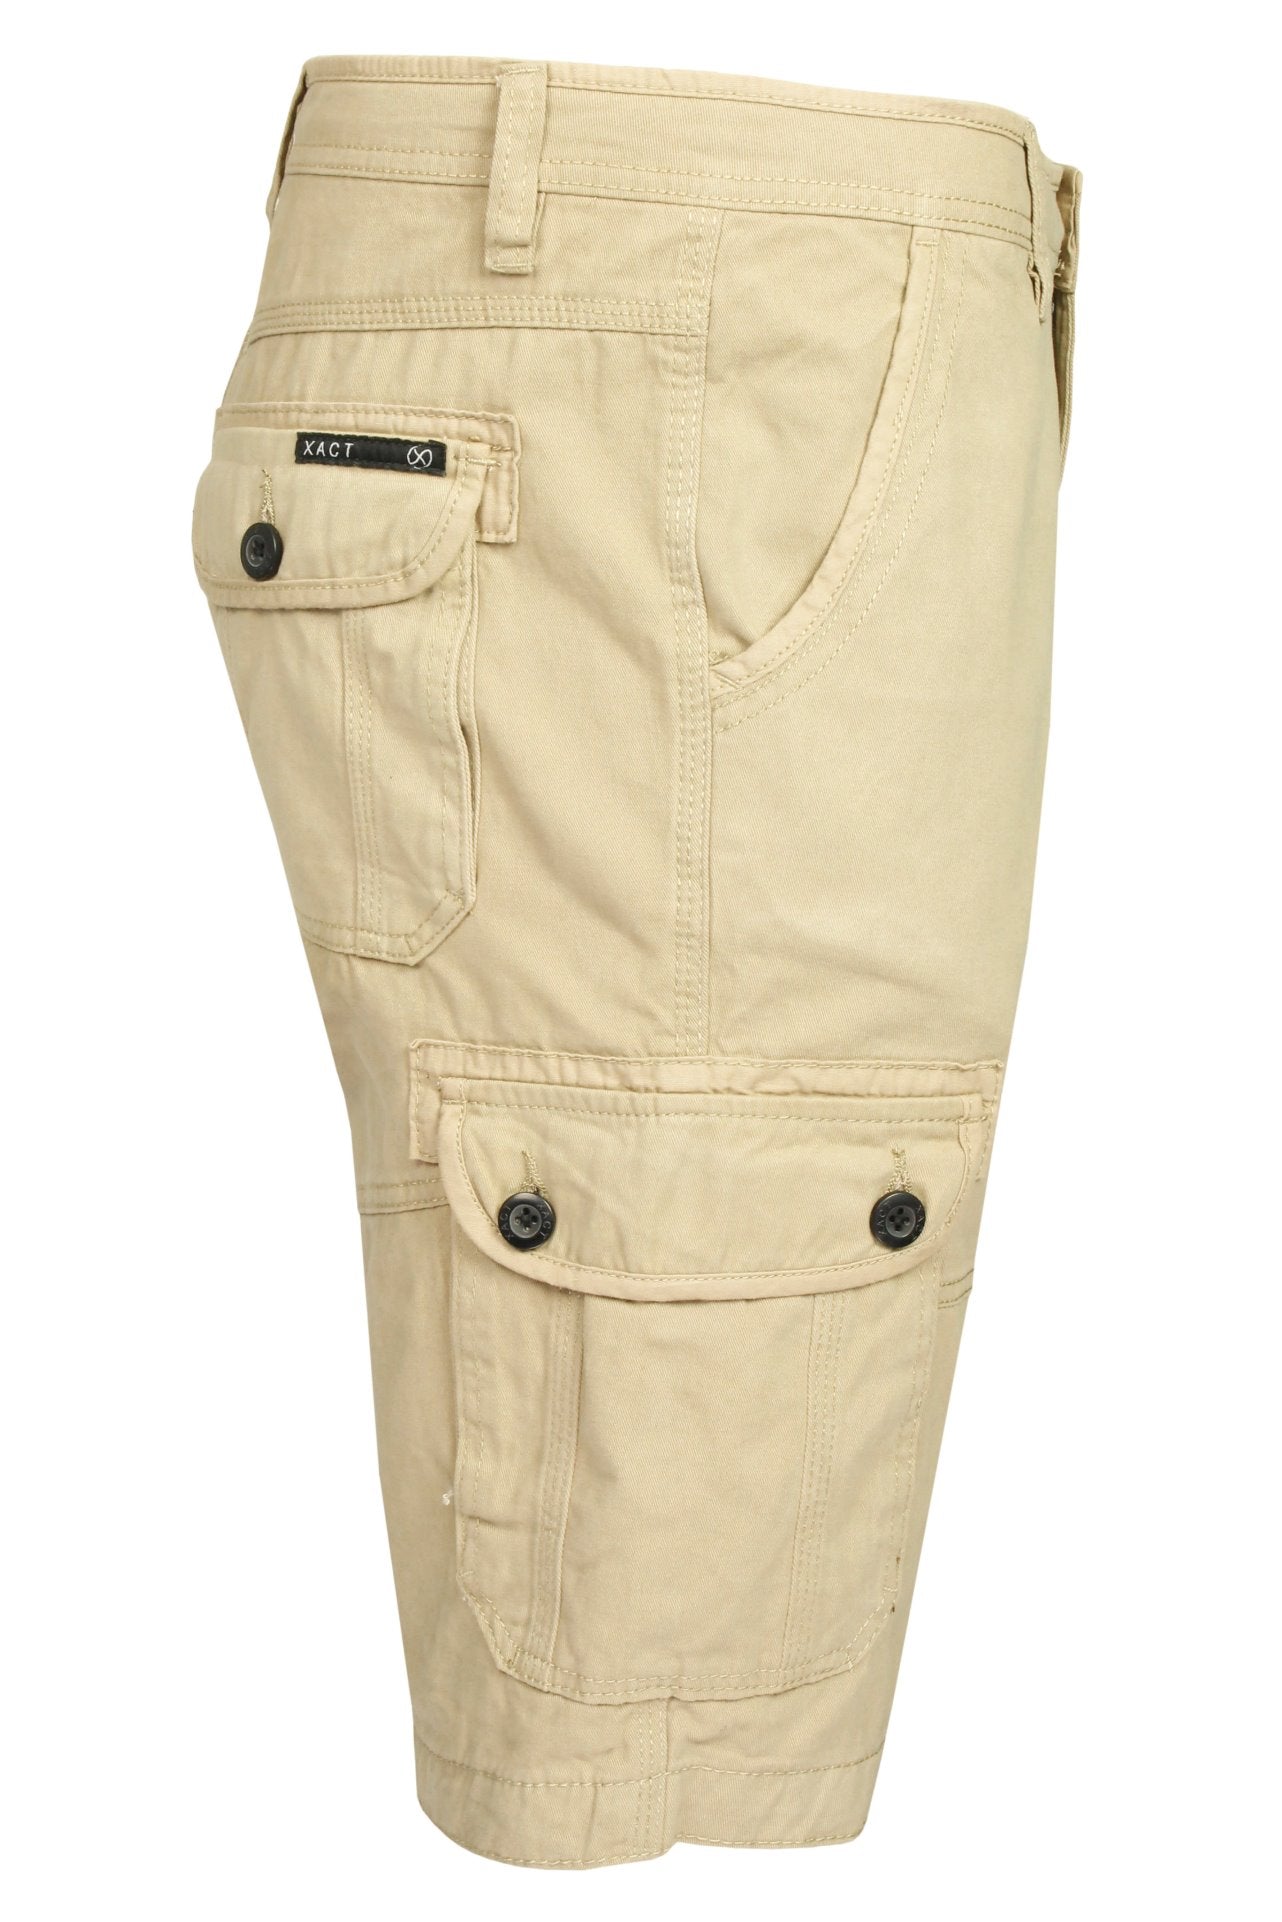 Mens Xact Cotton Twill Cargo Shorts-4